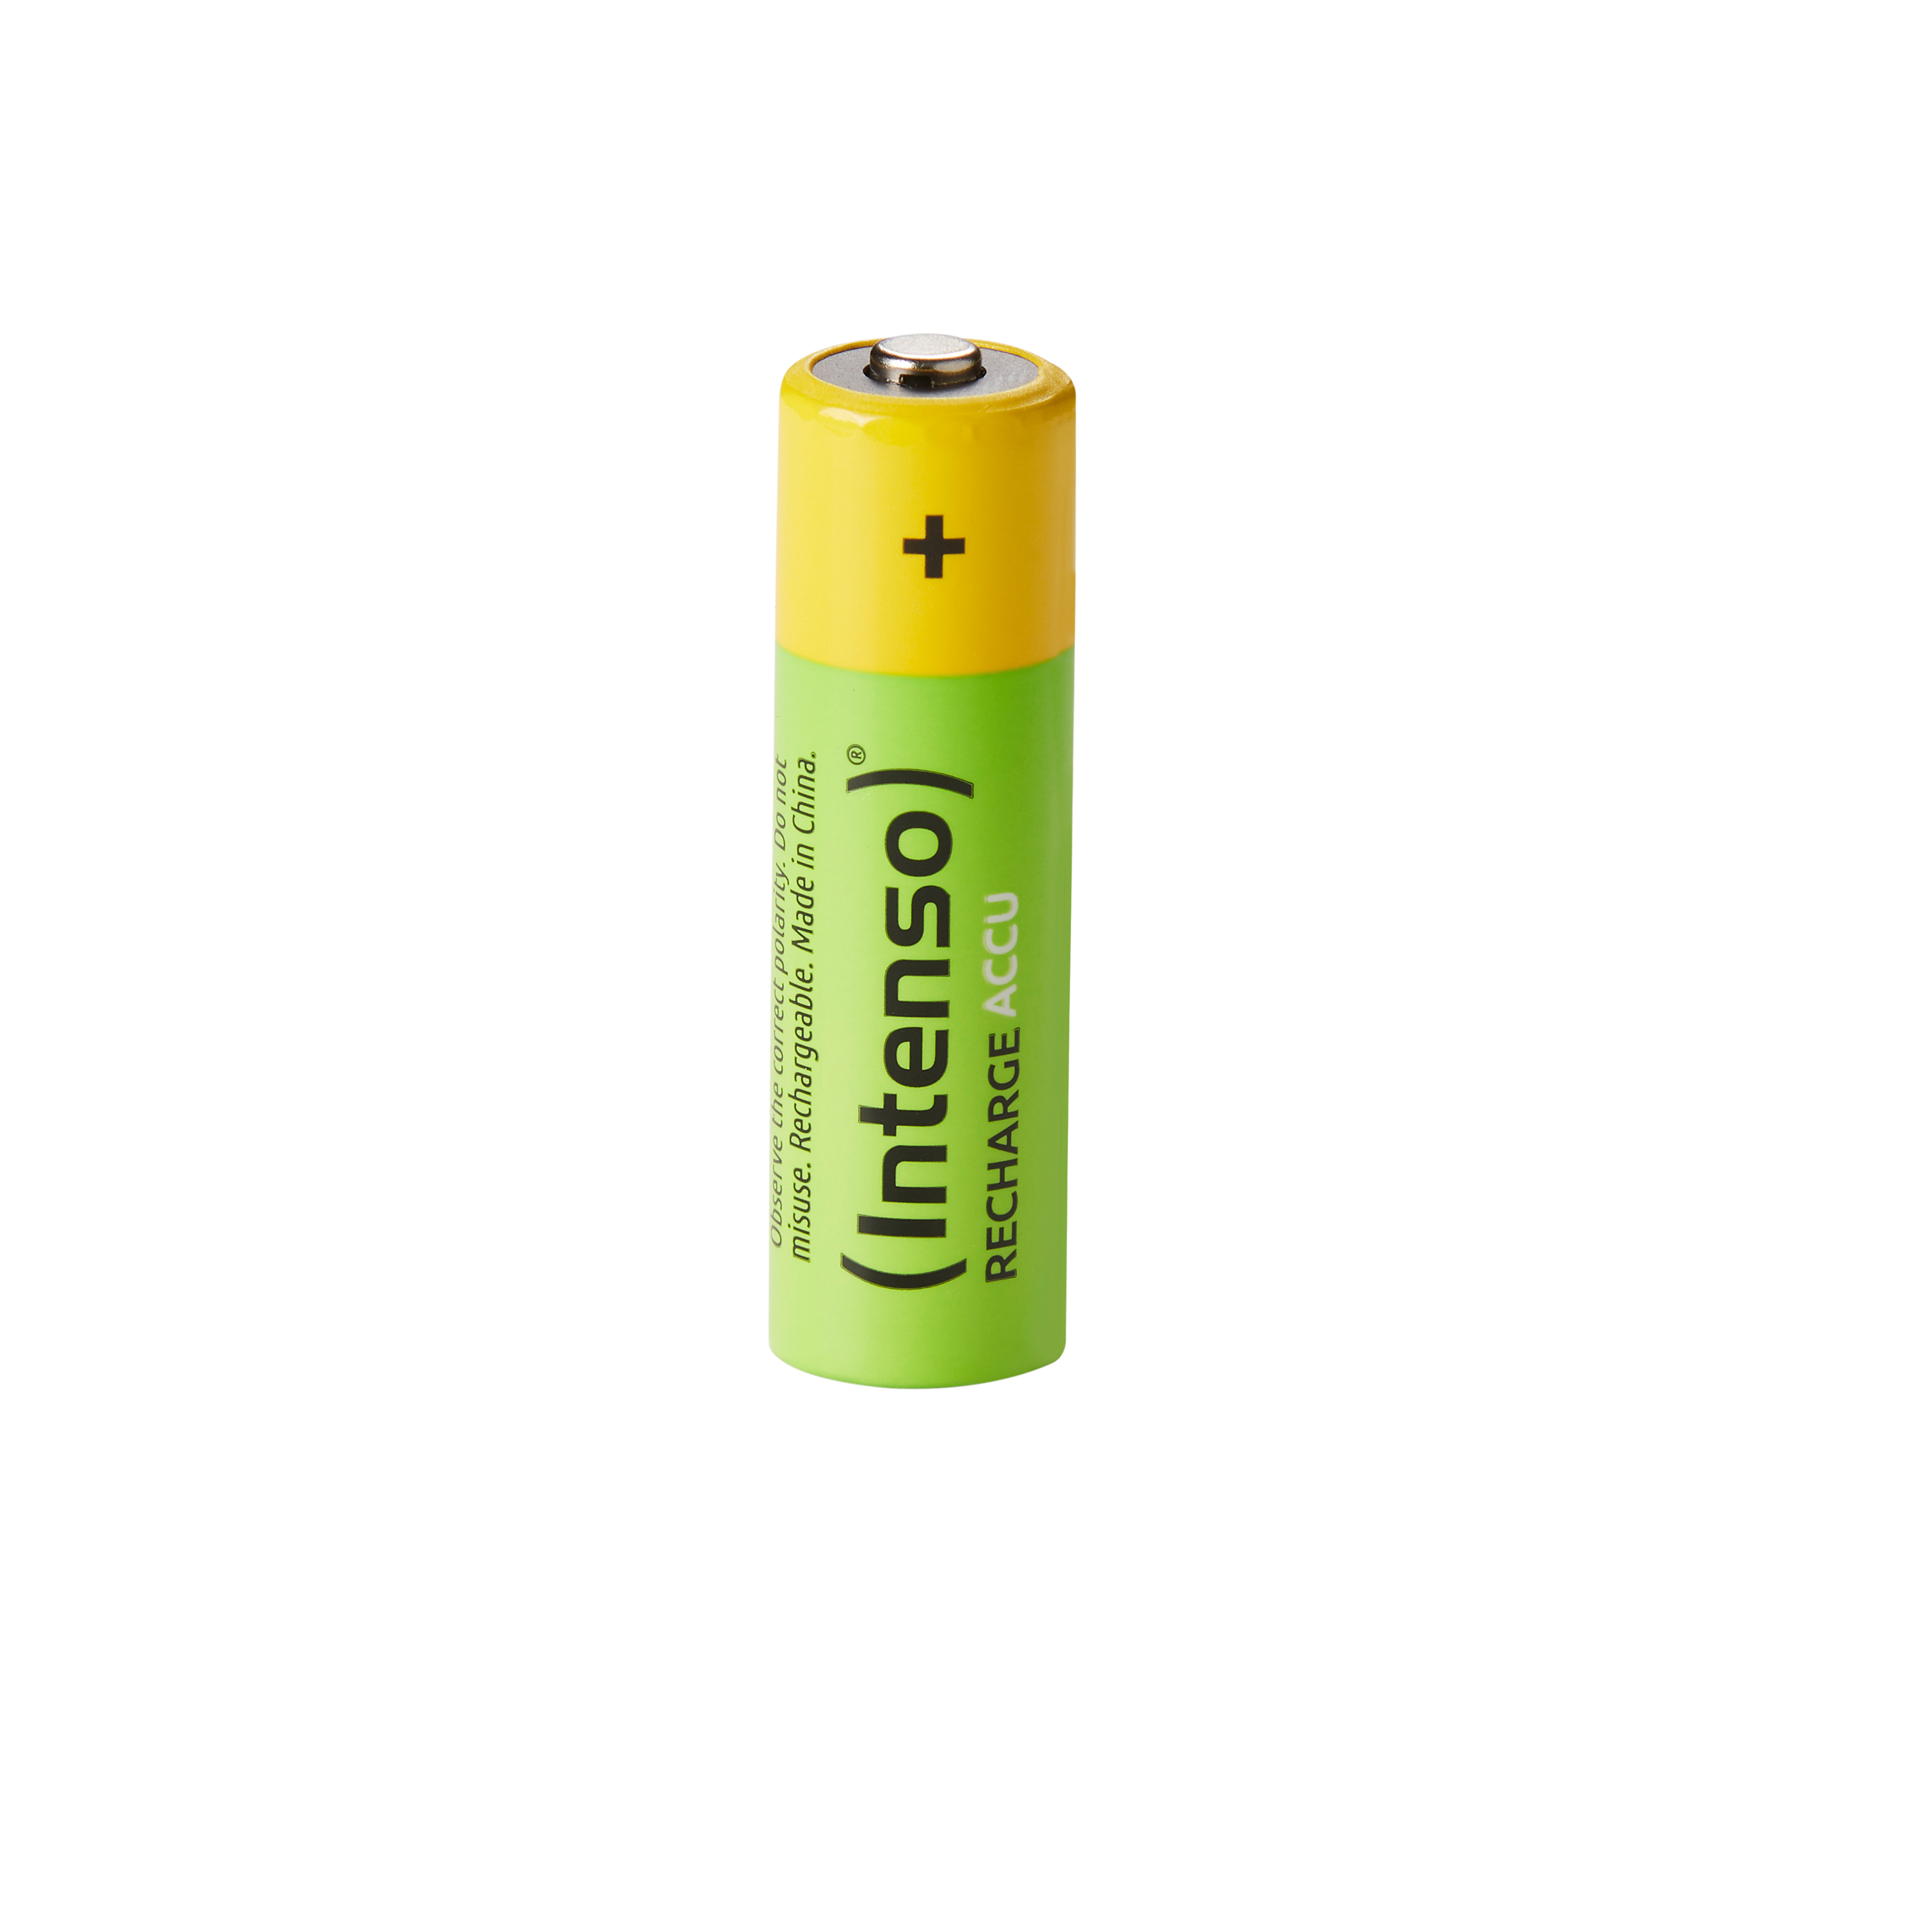 INTENSO Energy mAh NiMH AA 2700 Accu AA, mAh Wiederaufladbare 4er Pack Mignon, (Nickel-Metallhydrid) HR6, Batterie, 2700 HR6 Batterie Eco